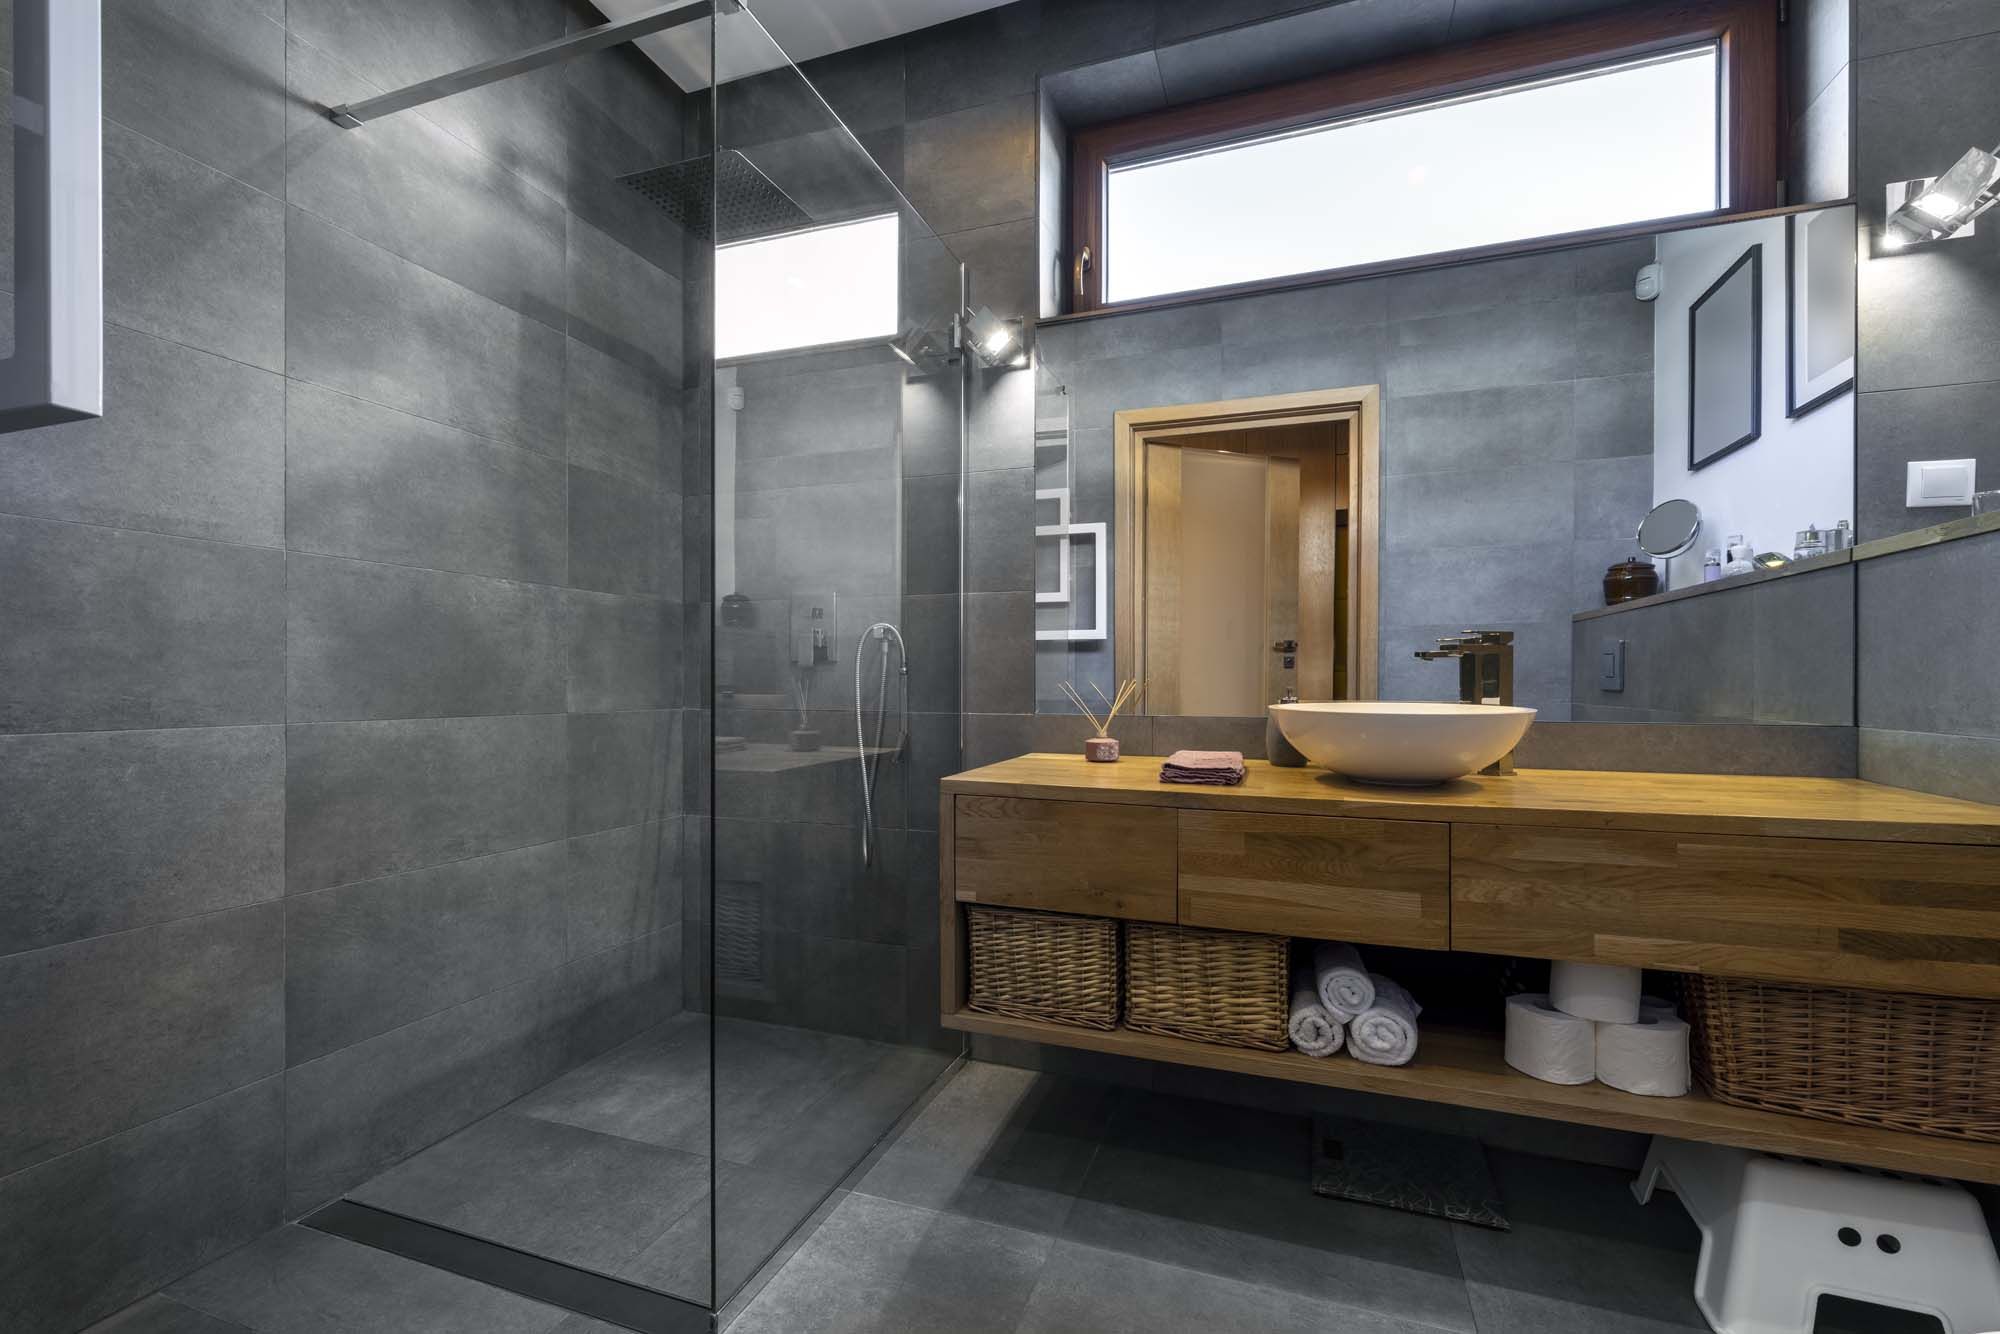 Bathroom Shower Area Ideas